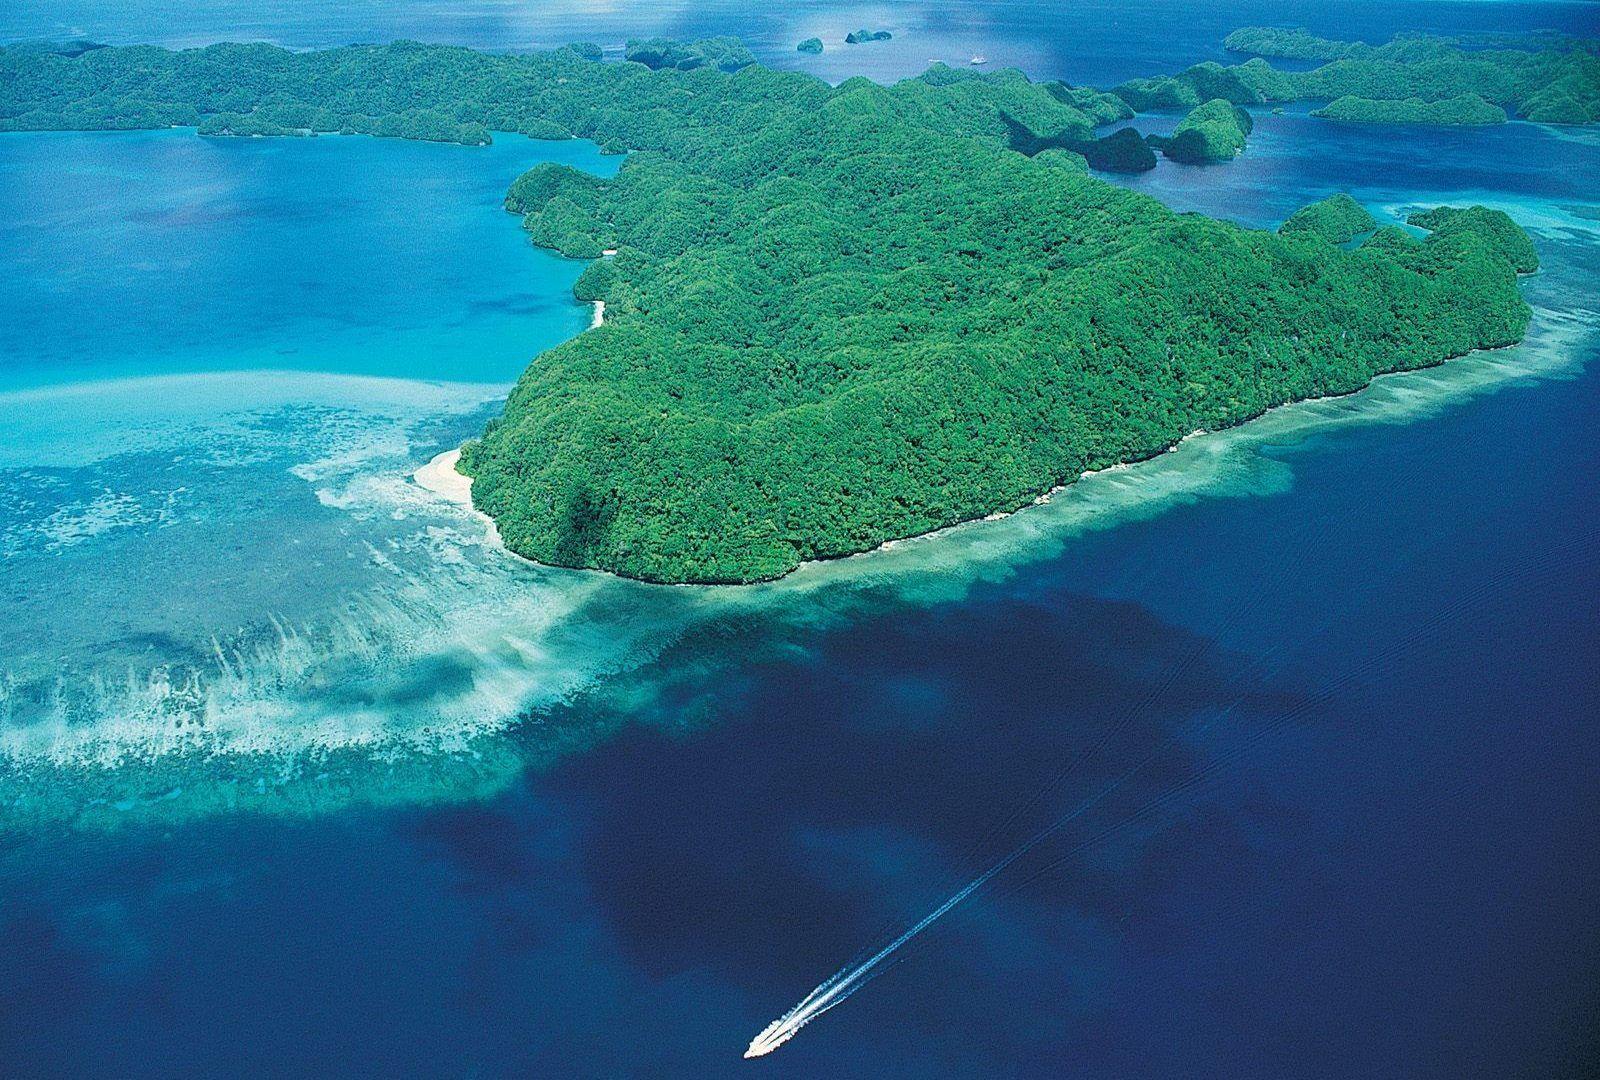 Palau Tag wallpaper: Clouds Rocks Skies Green Landscape Ocean